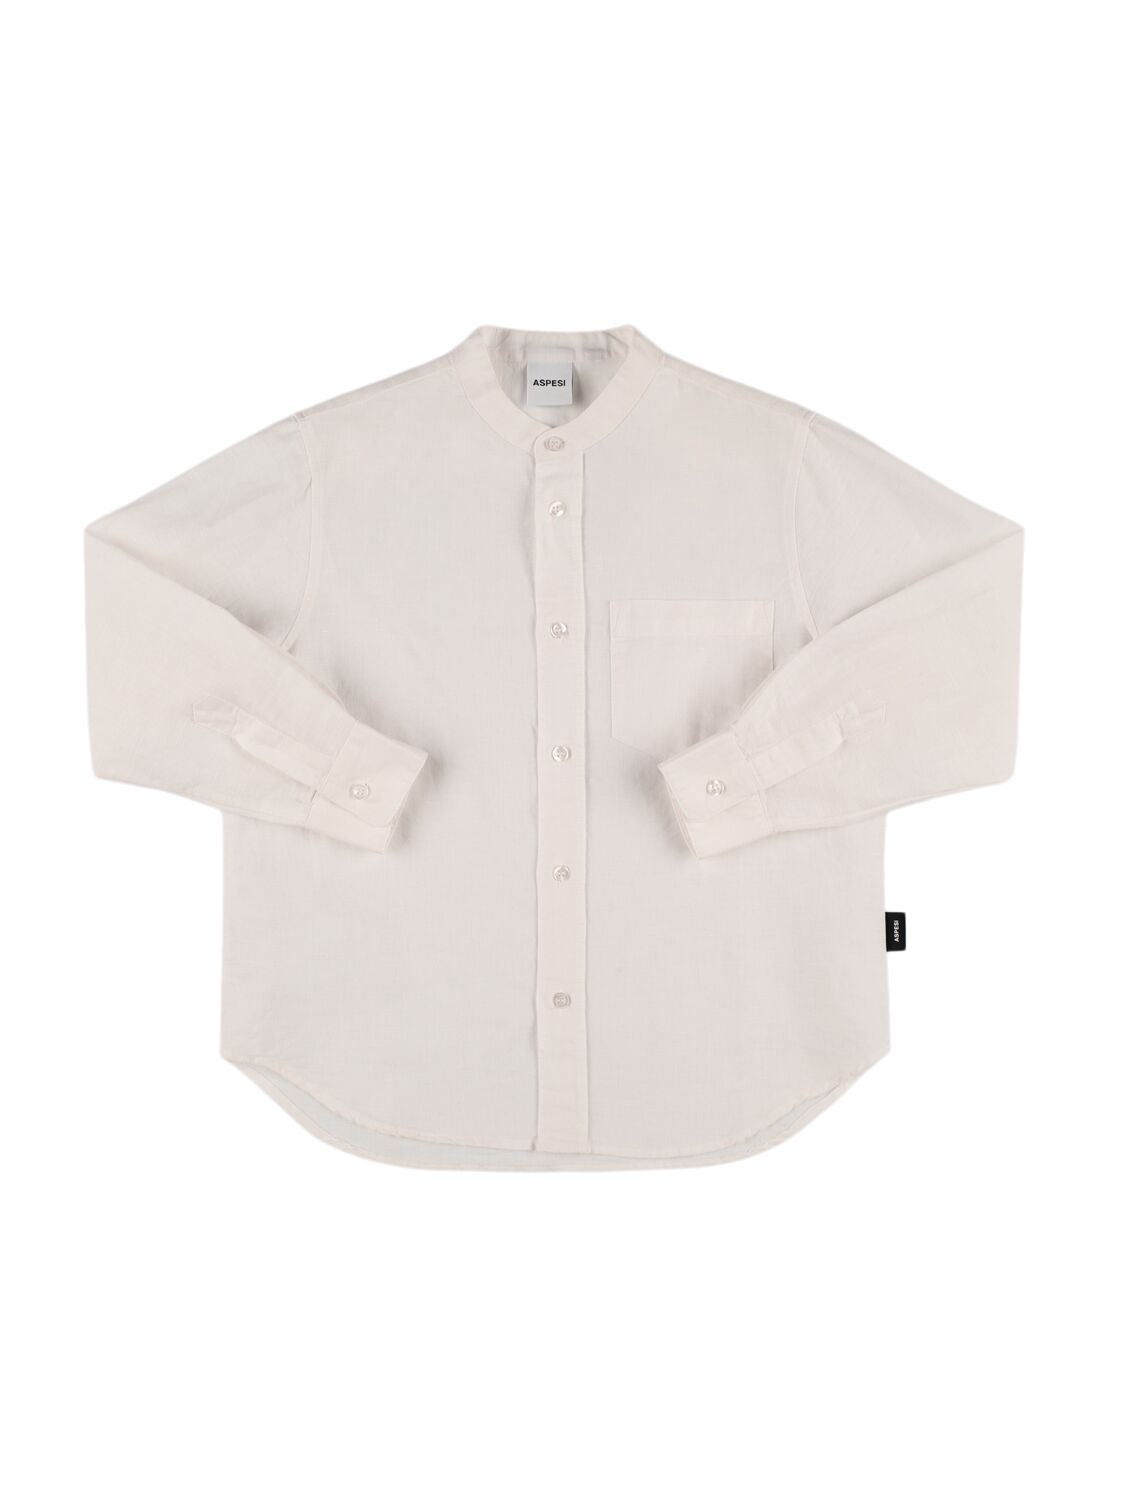 Image of Cotton Poplin Shirt